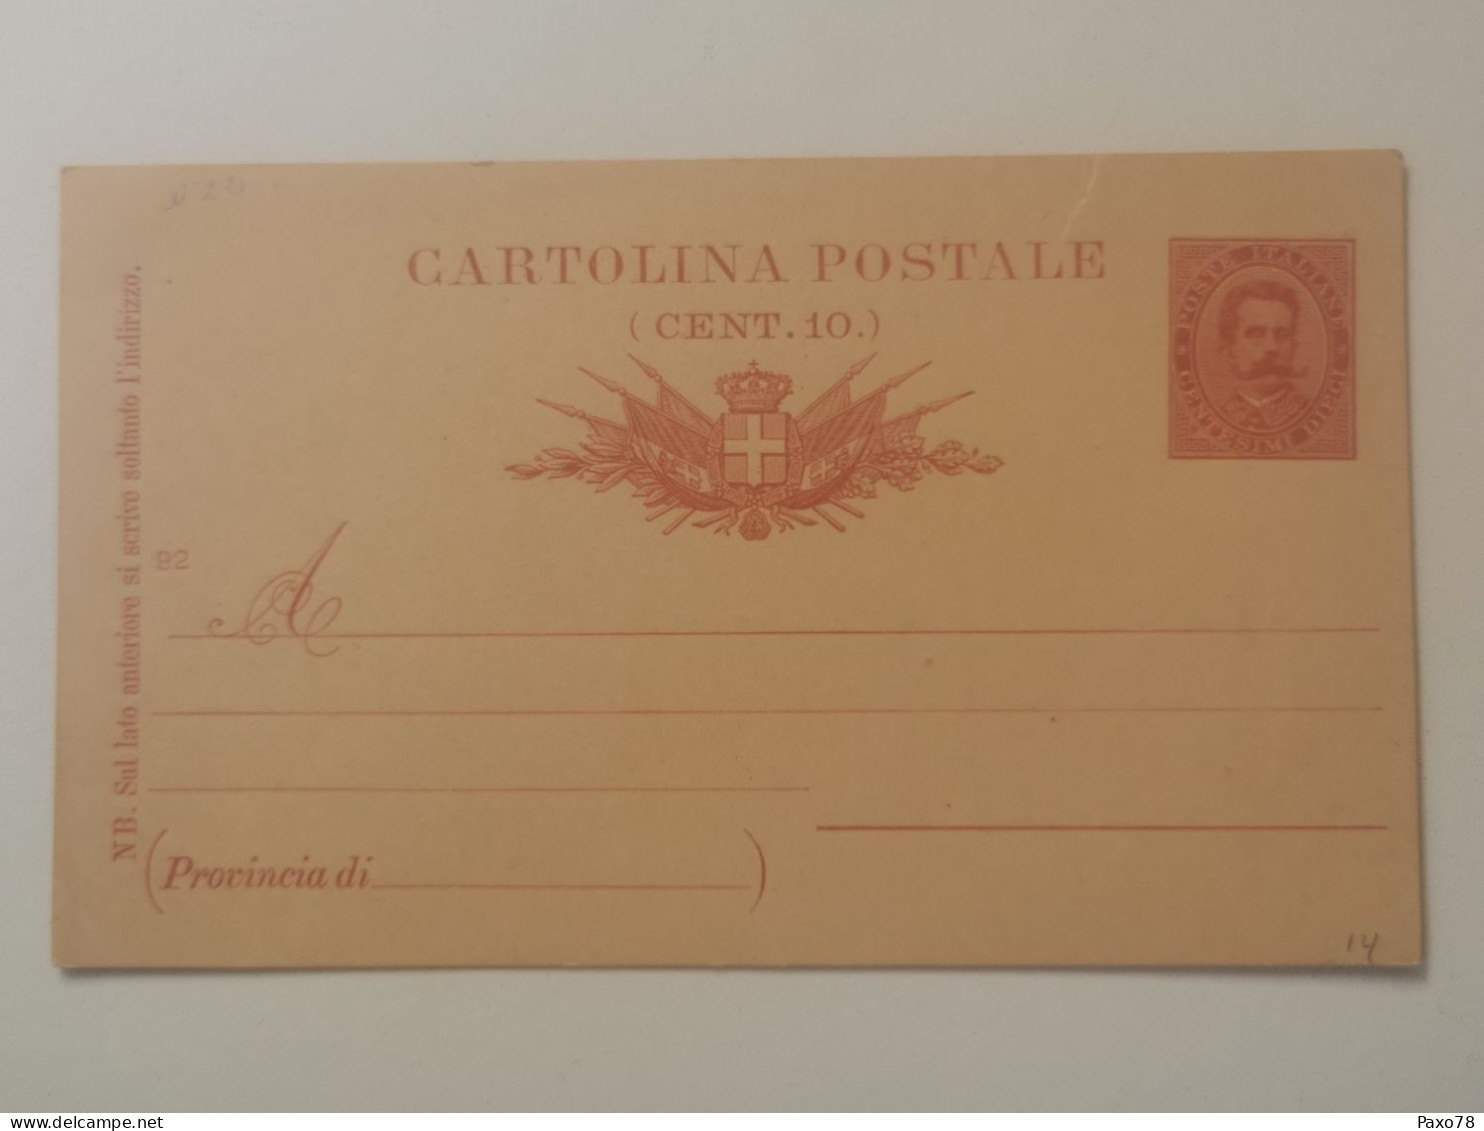 Cartolina Postale, 10C Vierge - Stamped Stationery